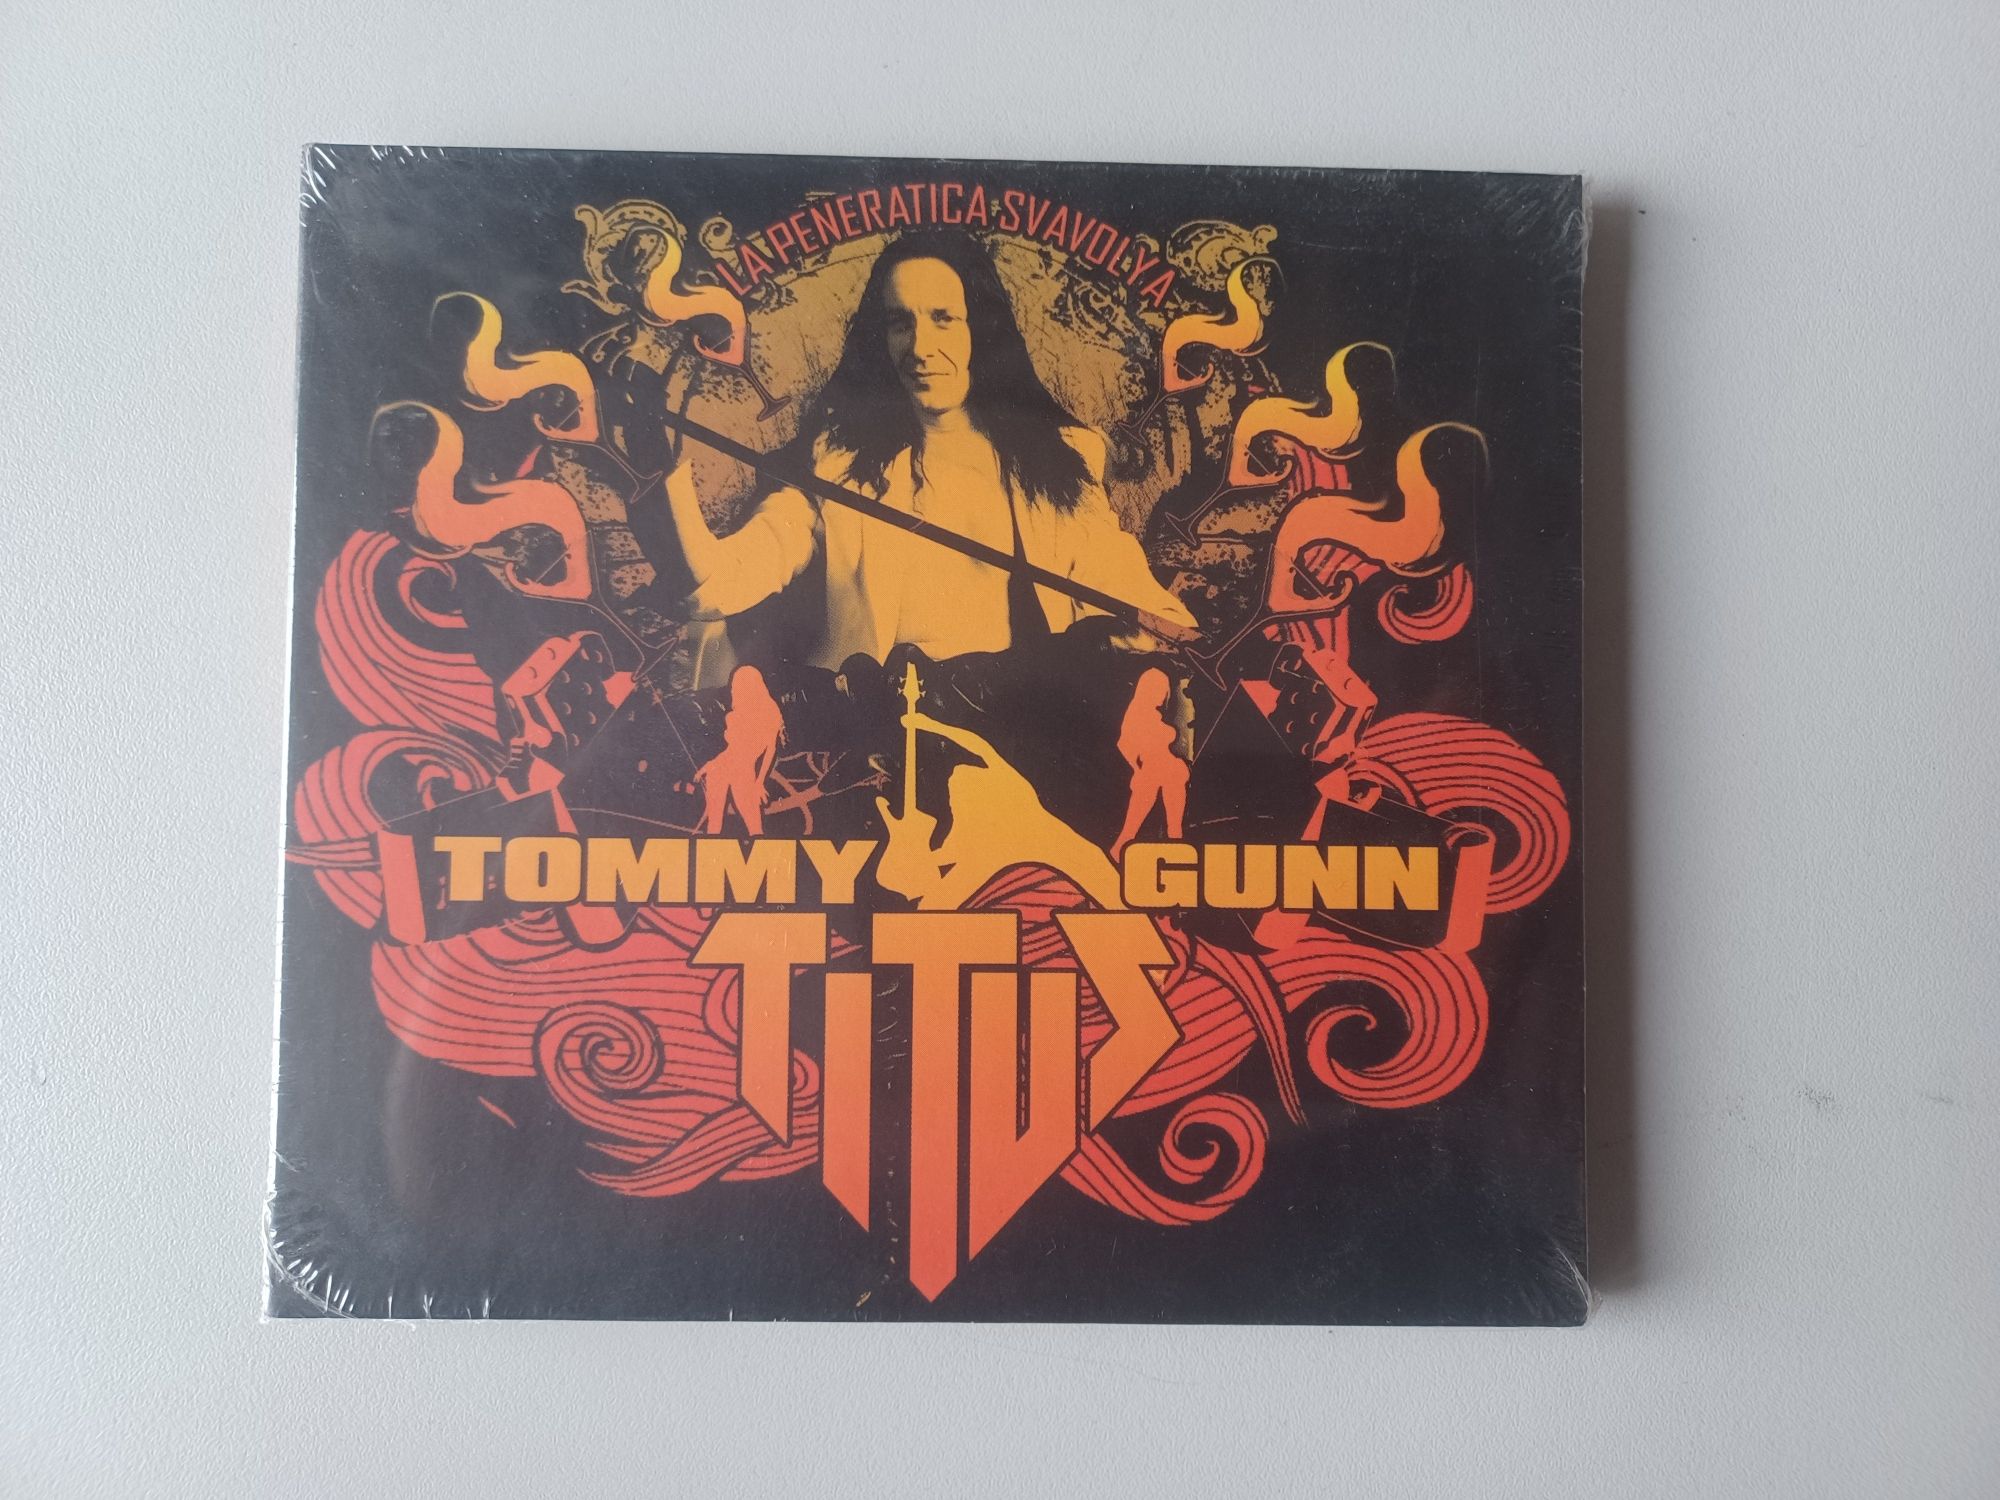 Titus Tommy Gunn "La Peneratica Svavolya" CD [Nowa w folii]